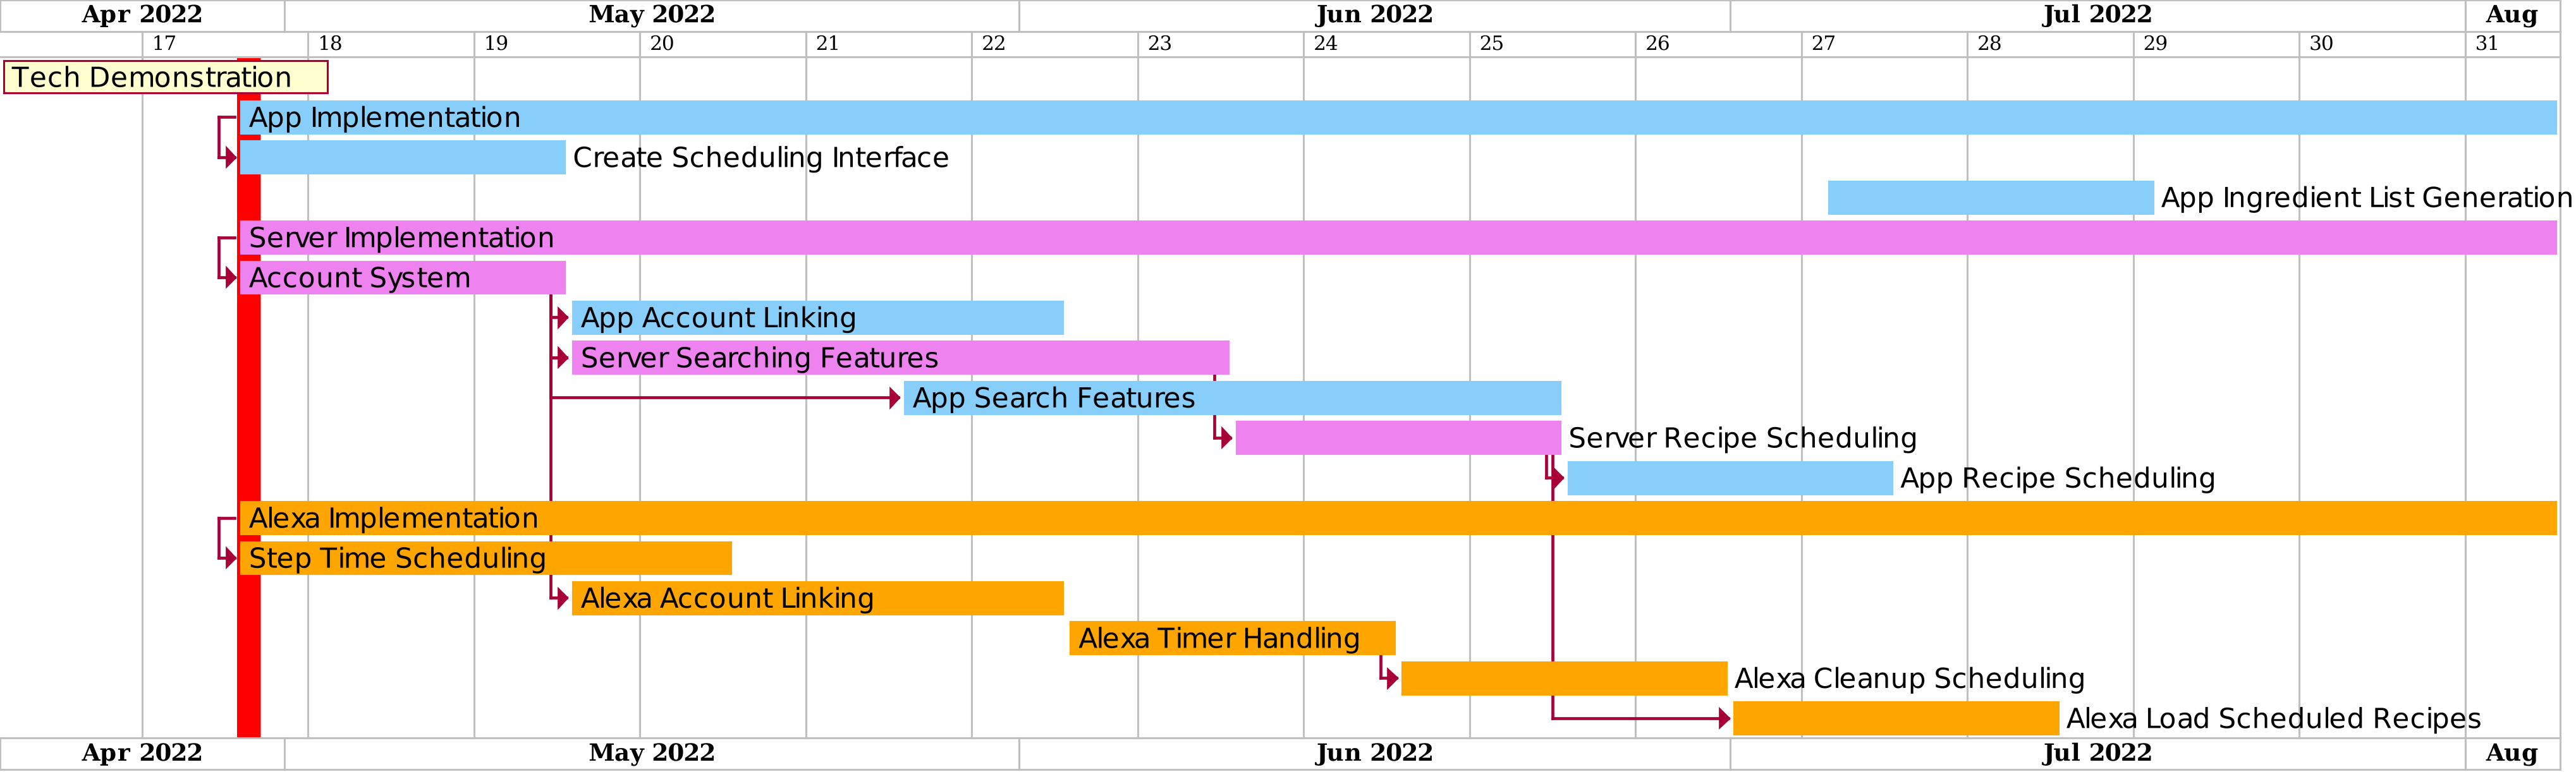 Summer Work Timeline